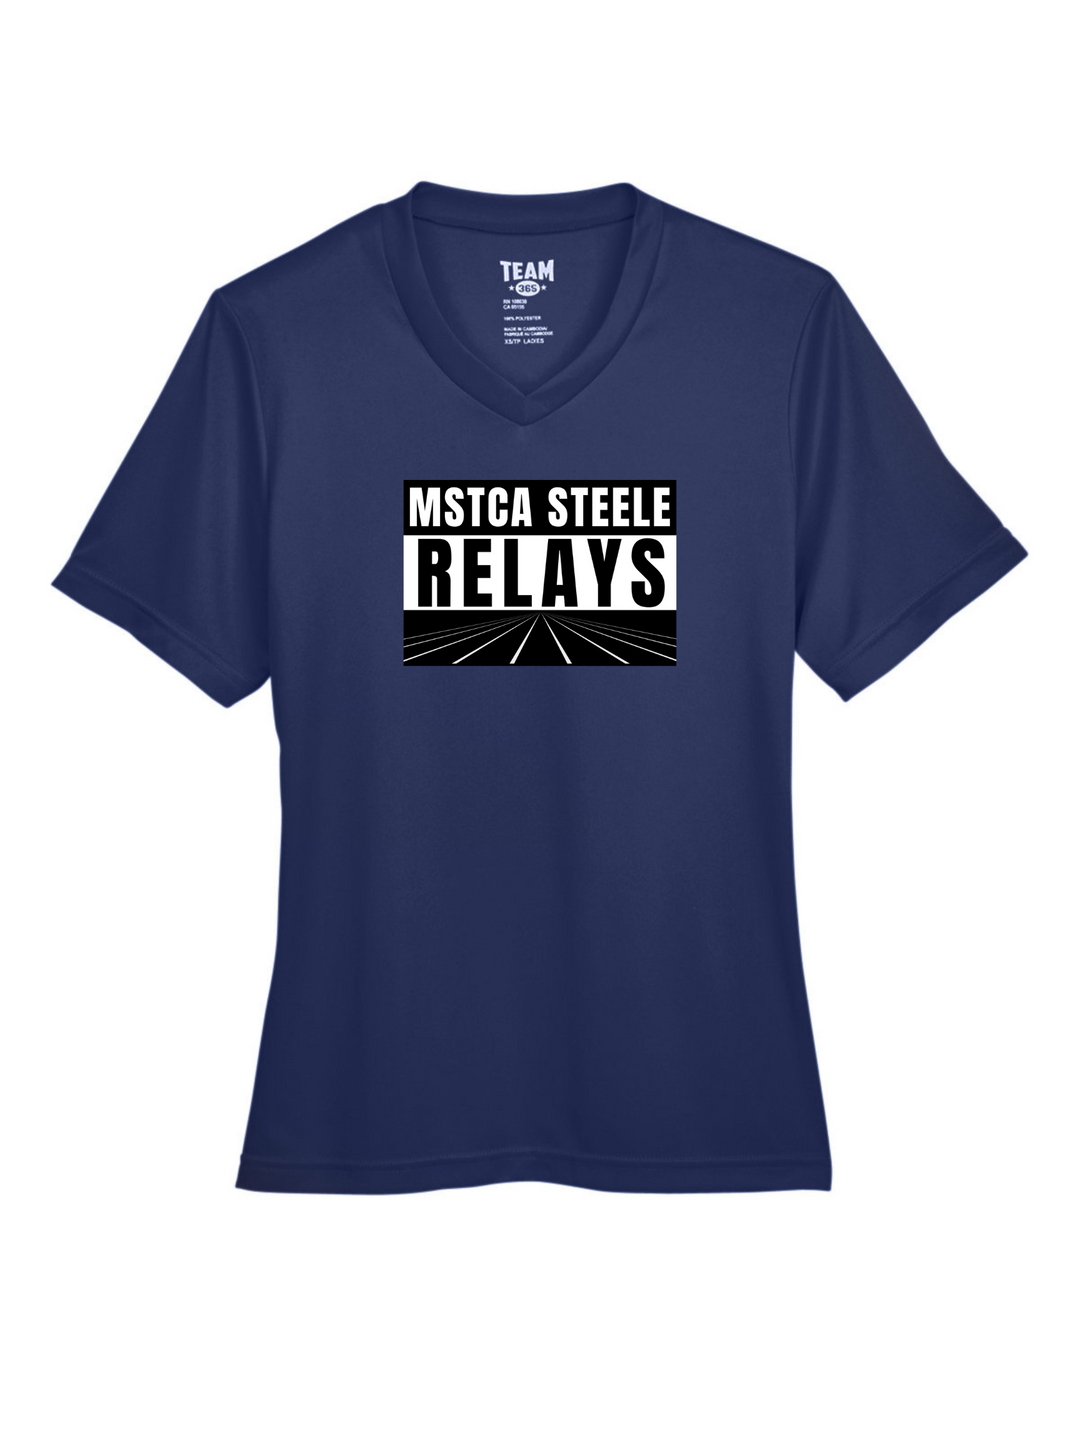 MSTCA Steele Relays - Women's Performance T-Shirt (TT11W)